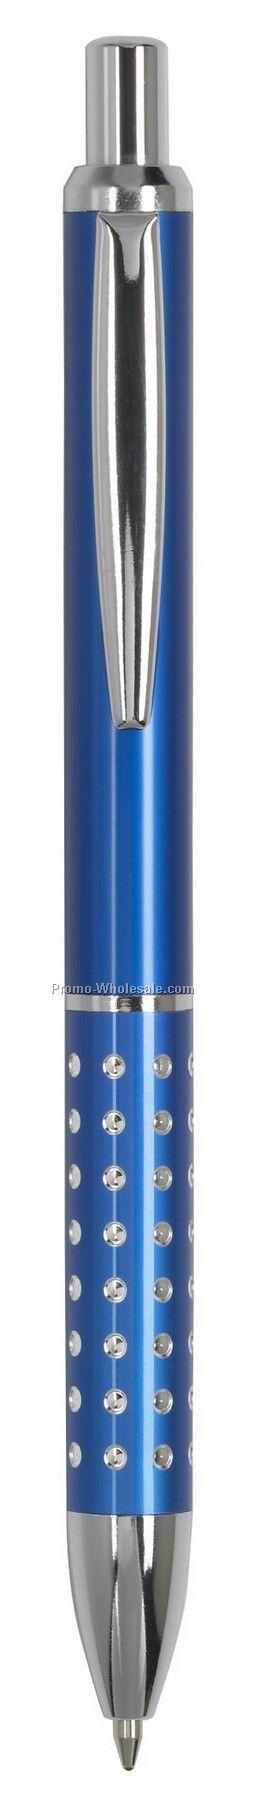 Vitoria Metallic Aluminum Barrel Pen With Chrome Grip - Next Day